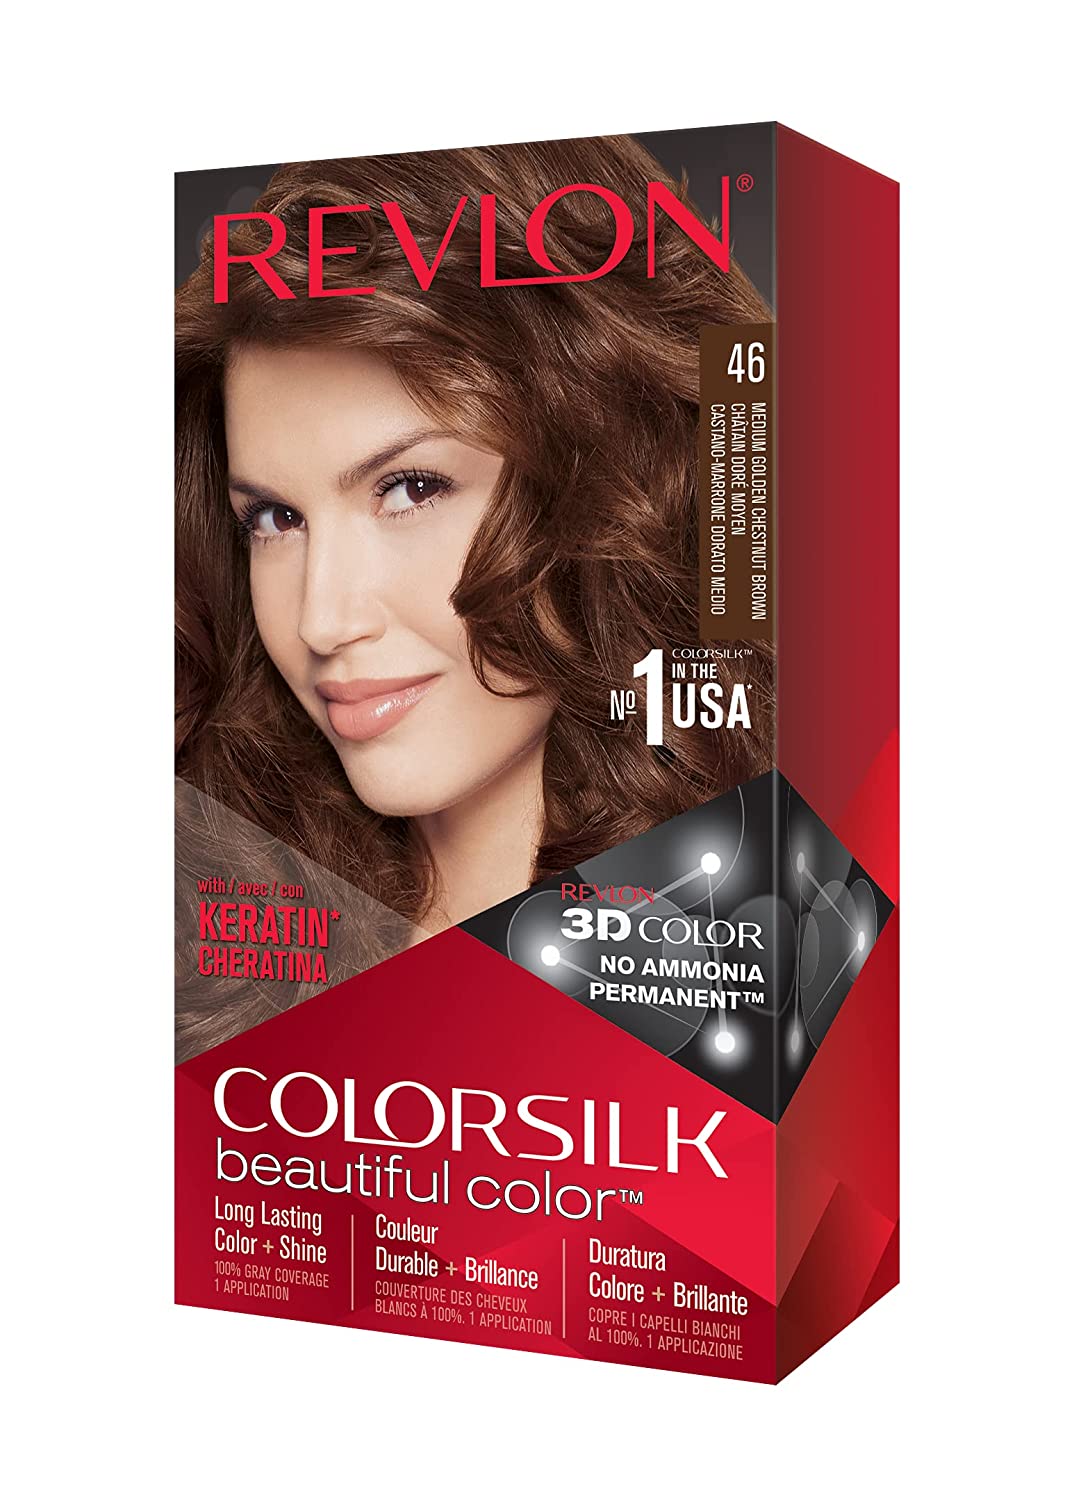 Revlon Colorsilk Beautiful Color $1.31 Shipped